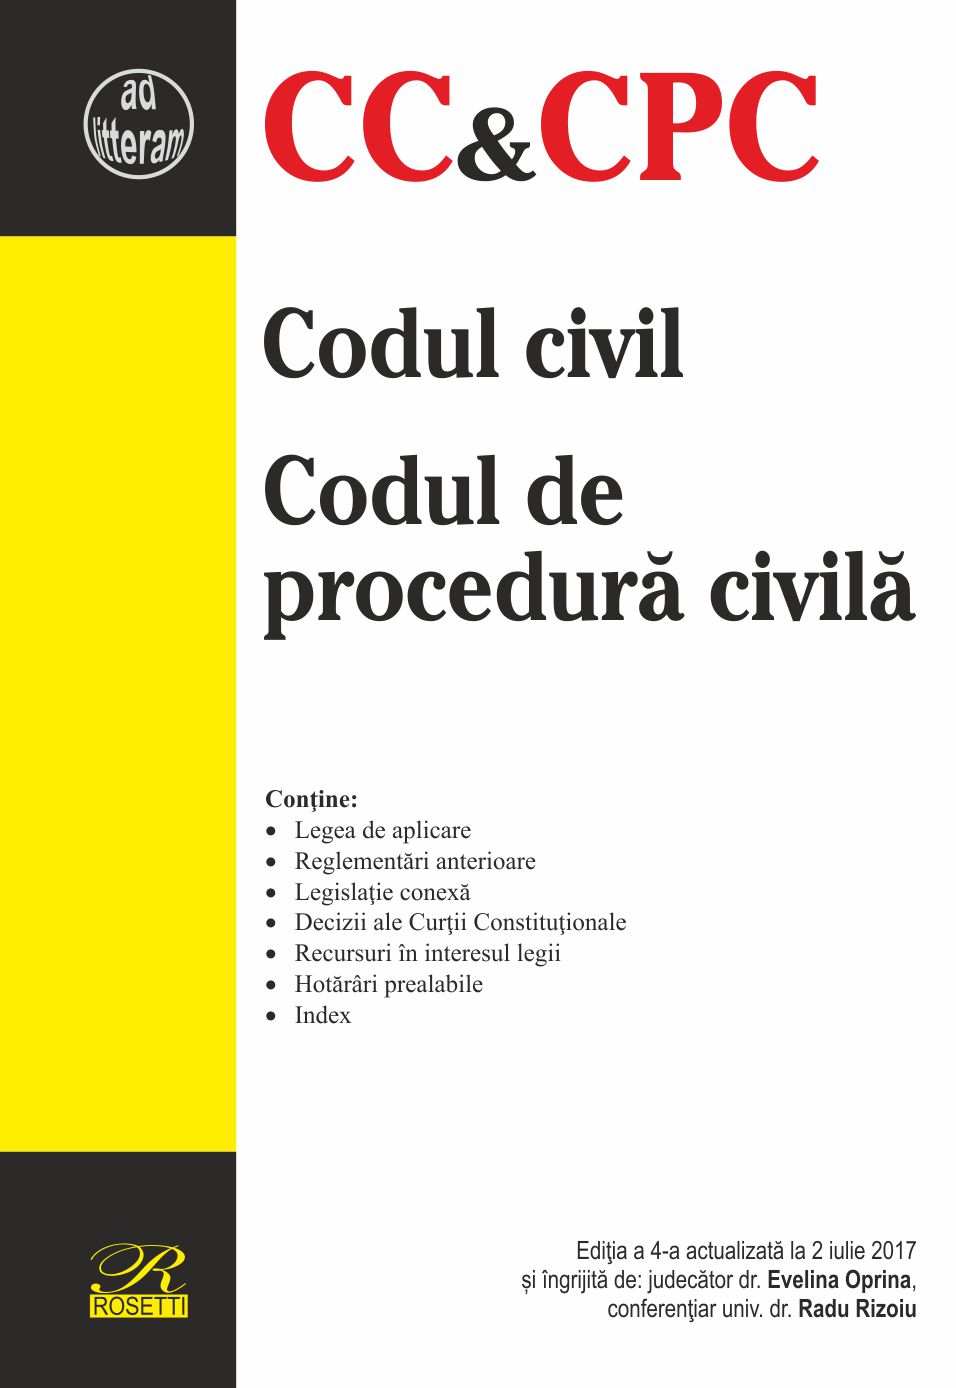 Codul civil. Codul de procedura civila ed.4 act. 2 iulie 2017